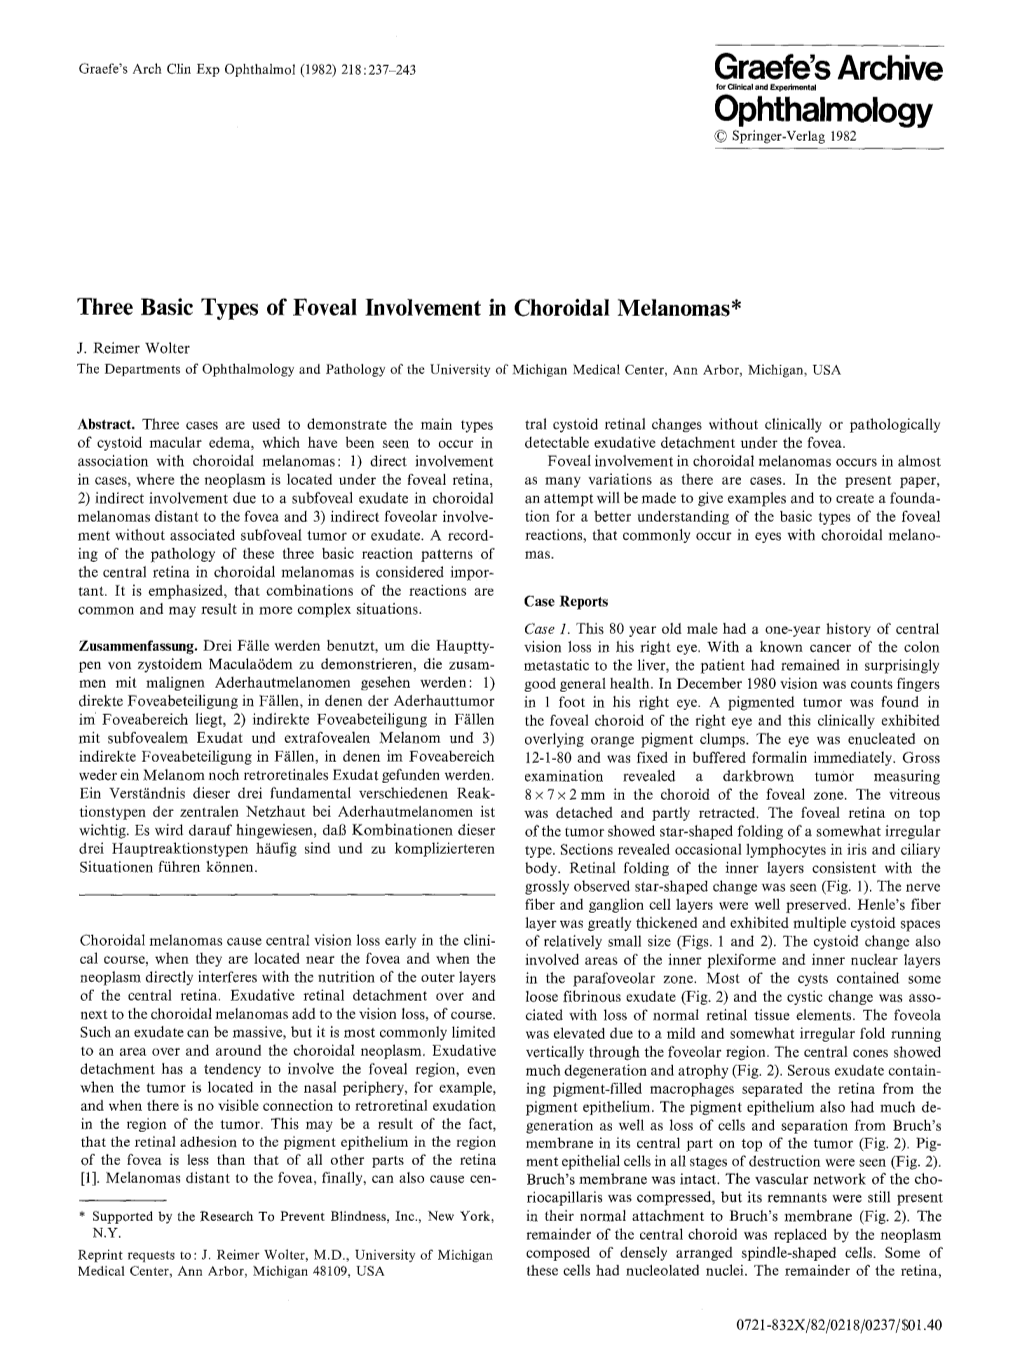 Three Basic Types of Foveal Involvement in Choroidal Melanomas*